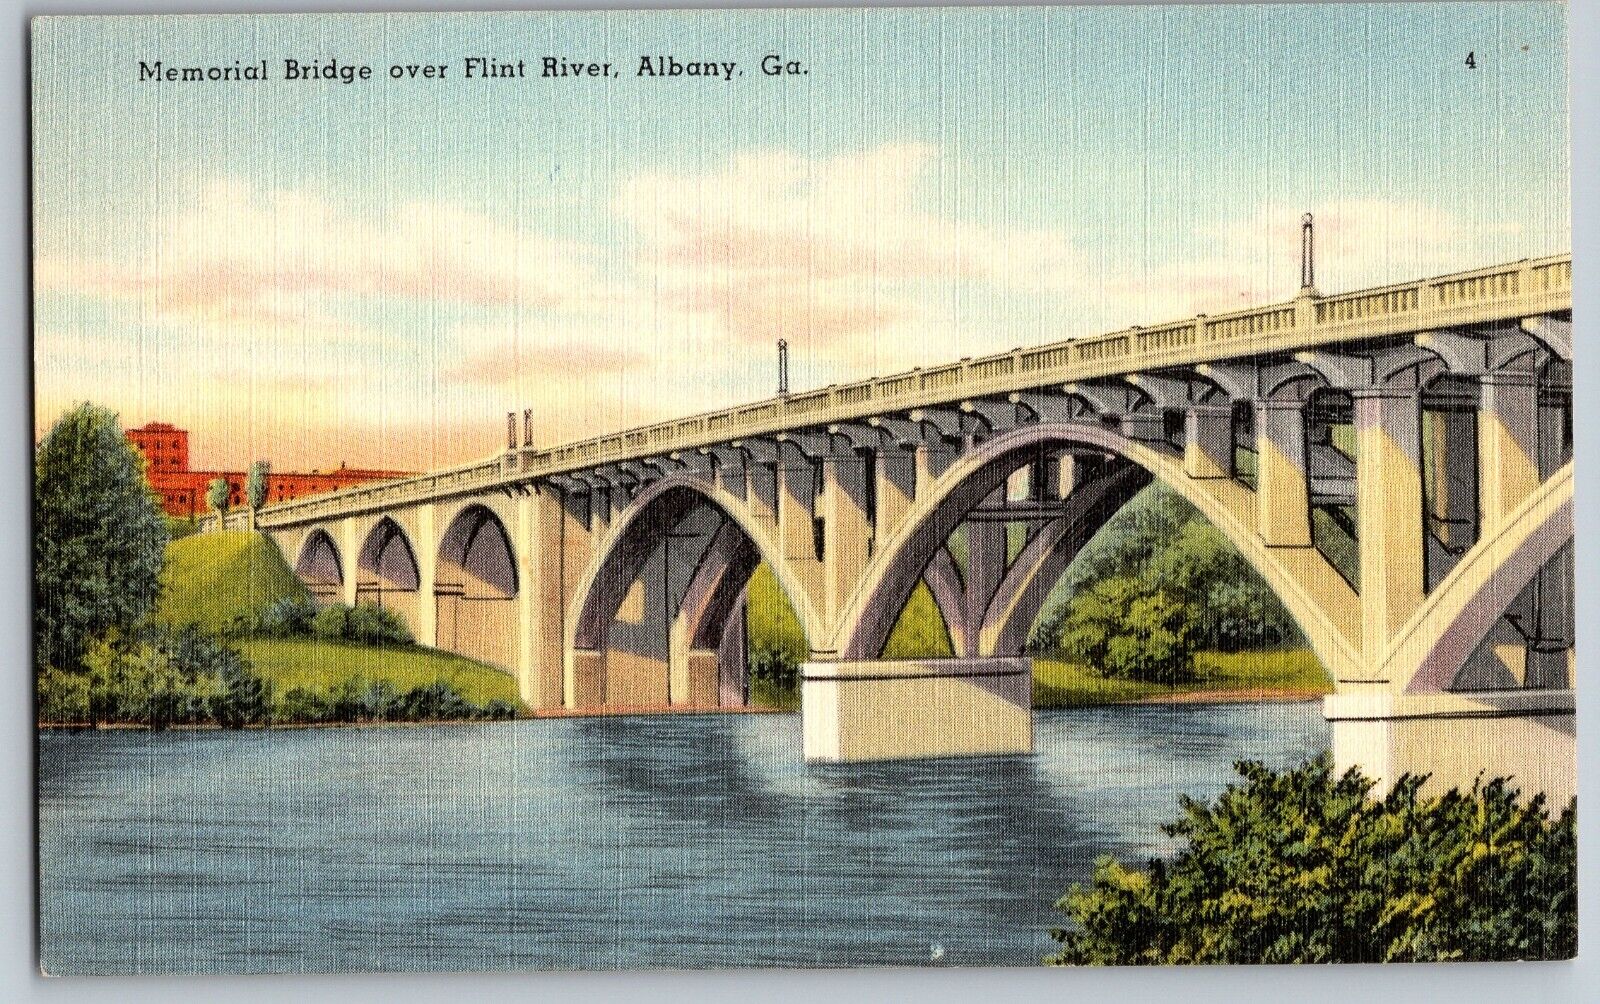 Albany, Georgia GA - Memorial Bridge over Flint River - Vintage Postcard